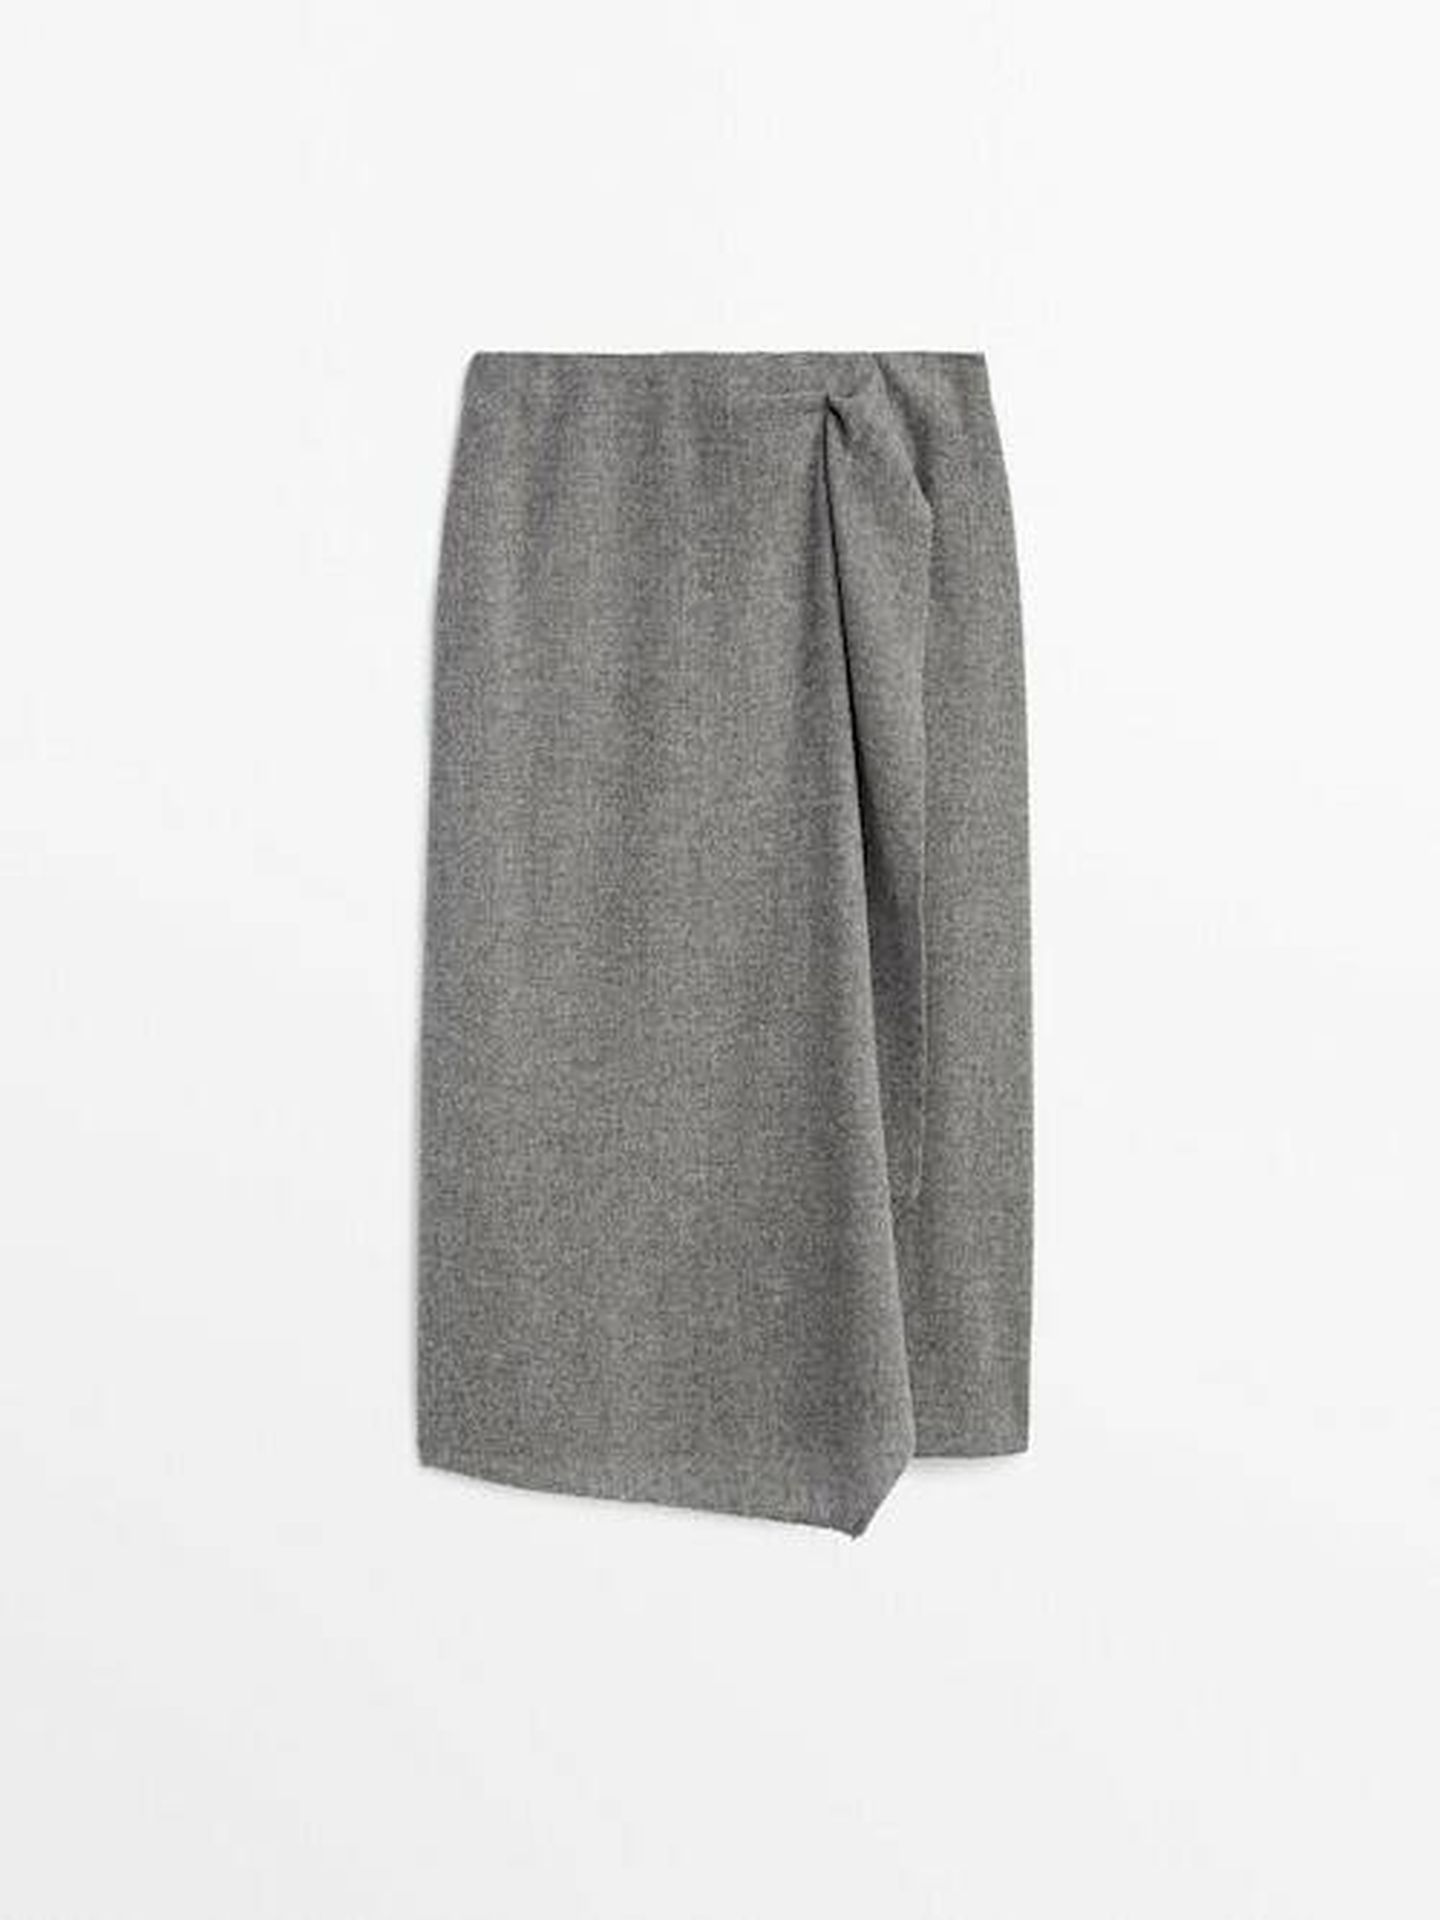 La falda gris de Massimo Dutti. (Cortesía)